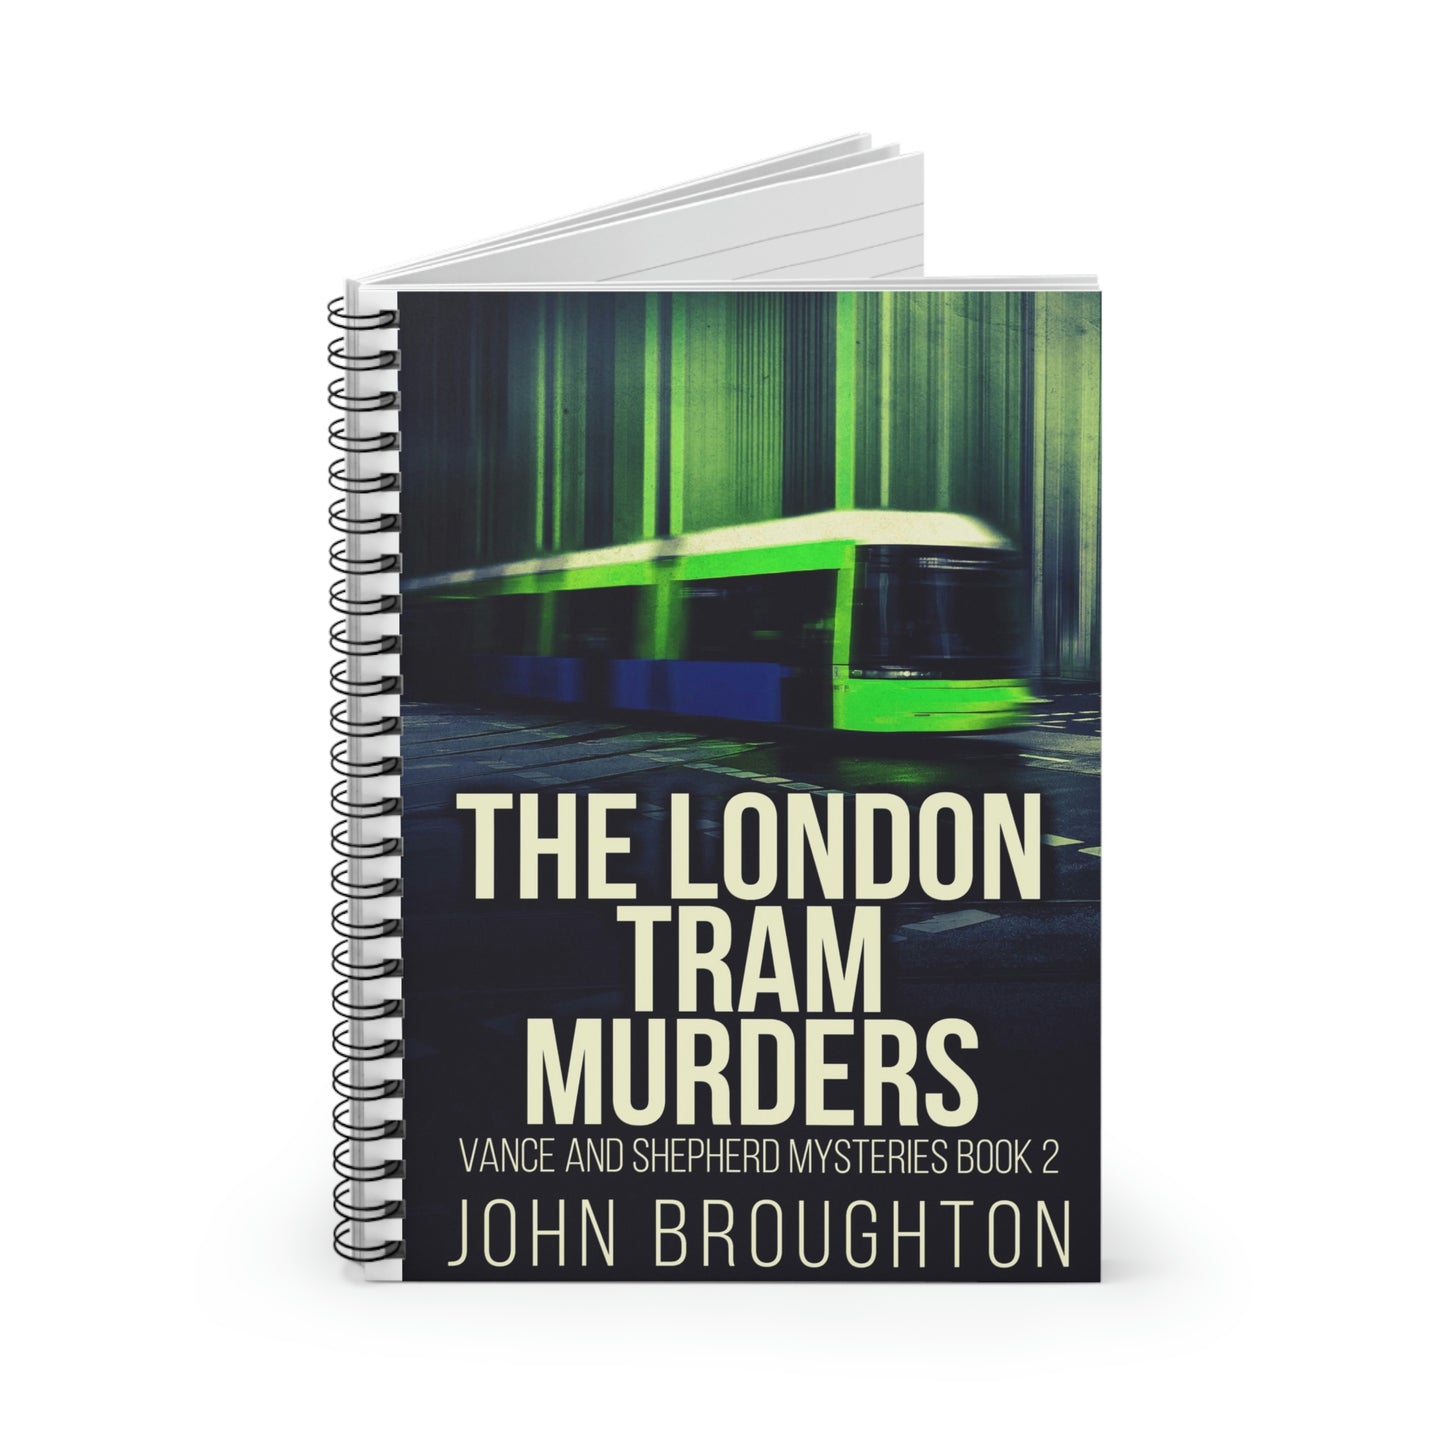 The London Tram Murders - Spiral Notebook